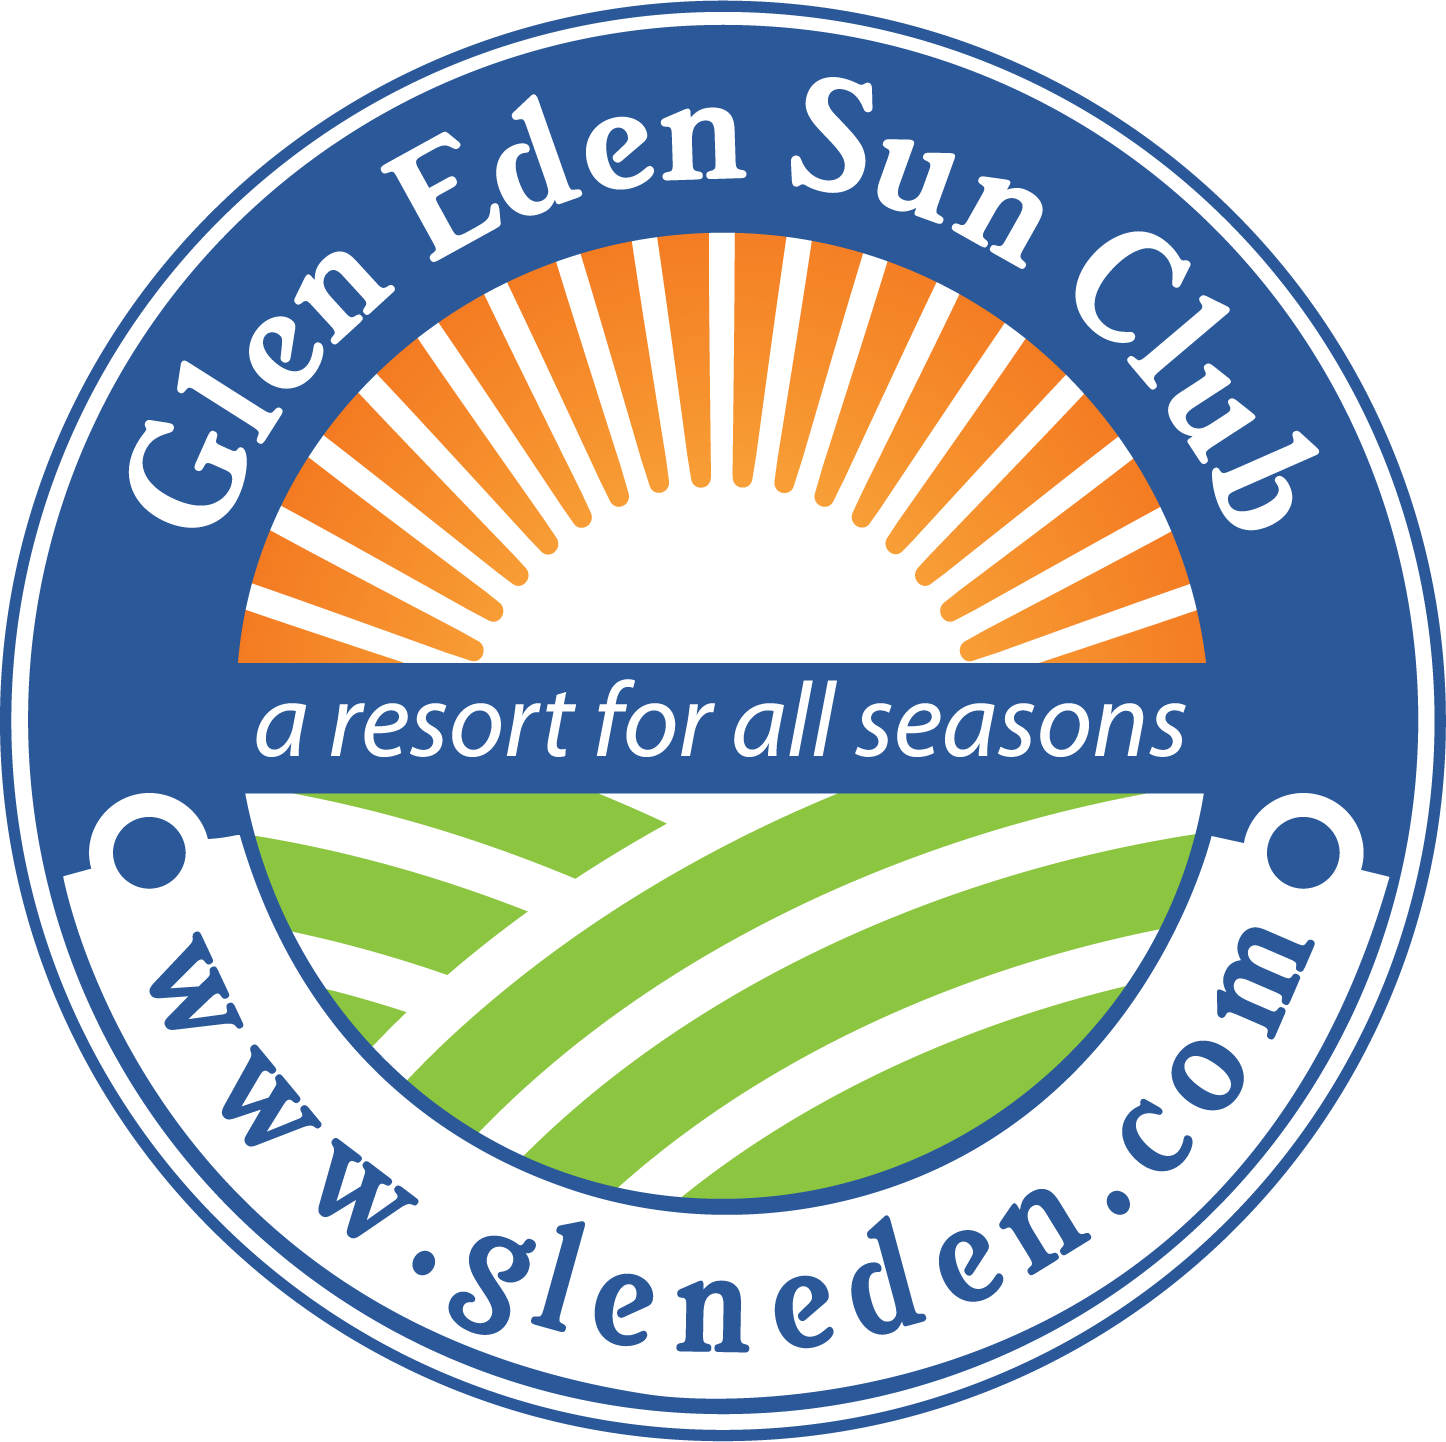 Glen Eden Nude 5K Run/Walk